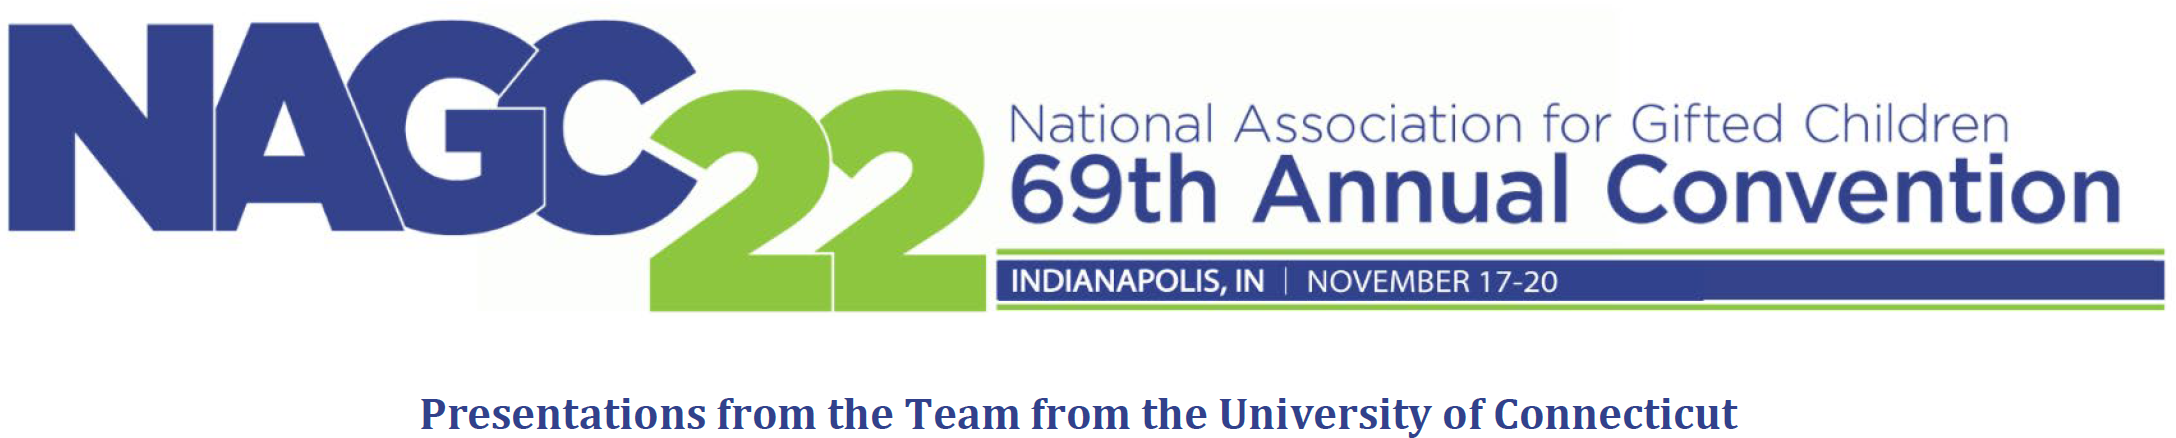 NAGC 2022 Conference Logo